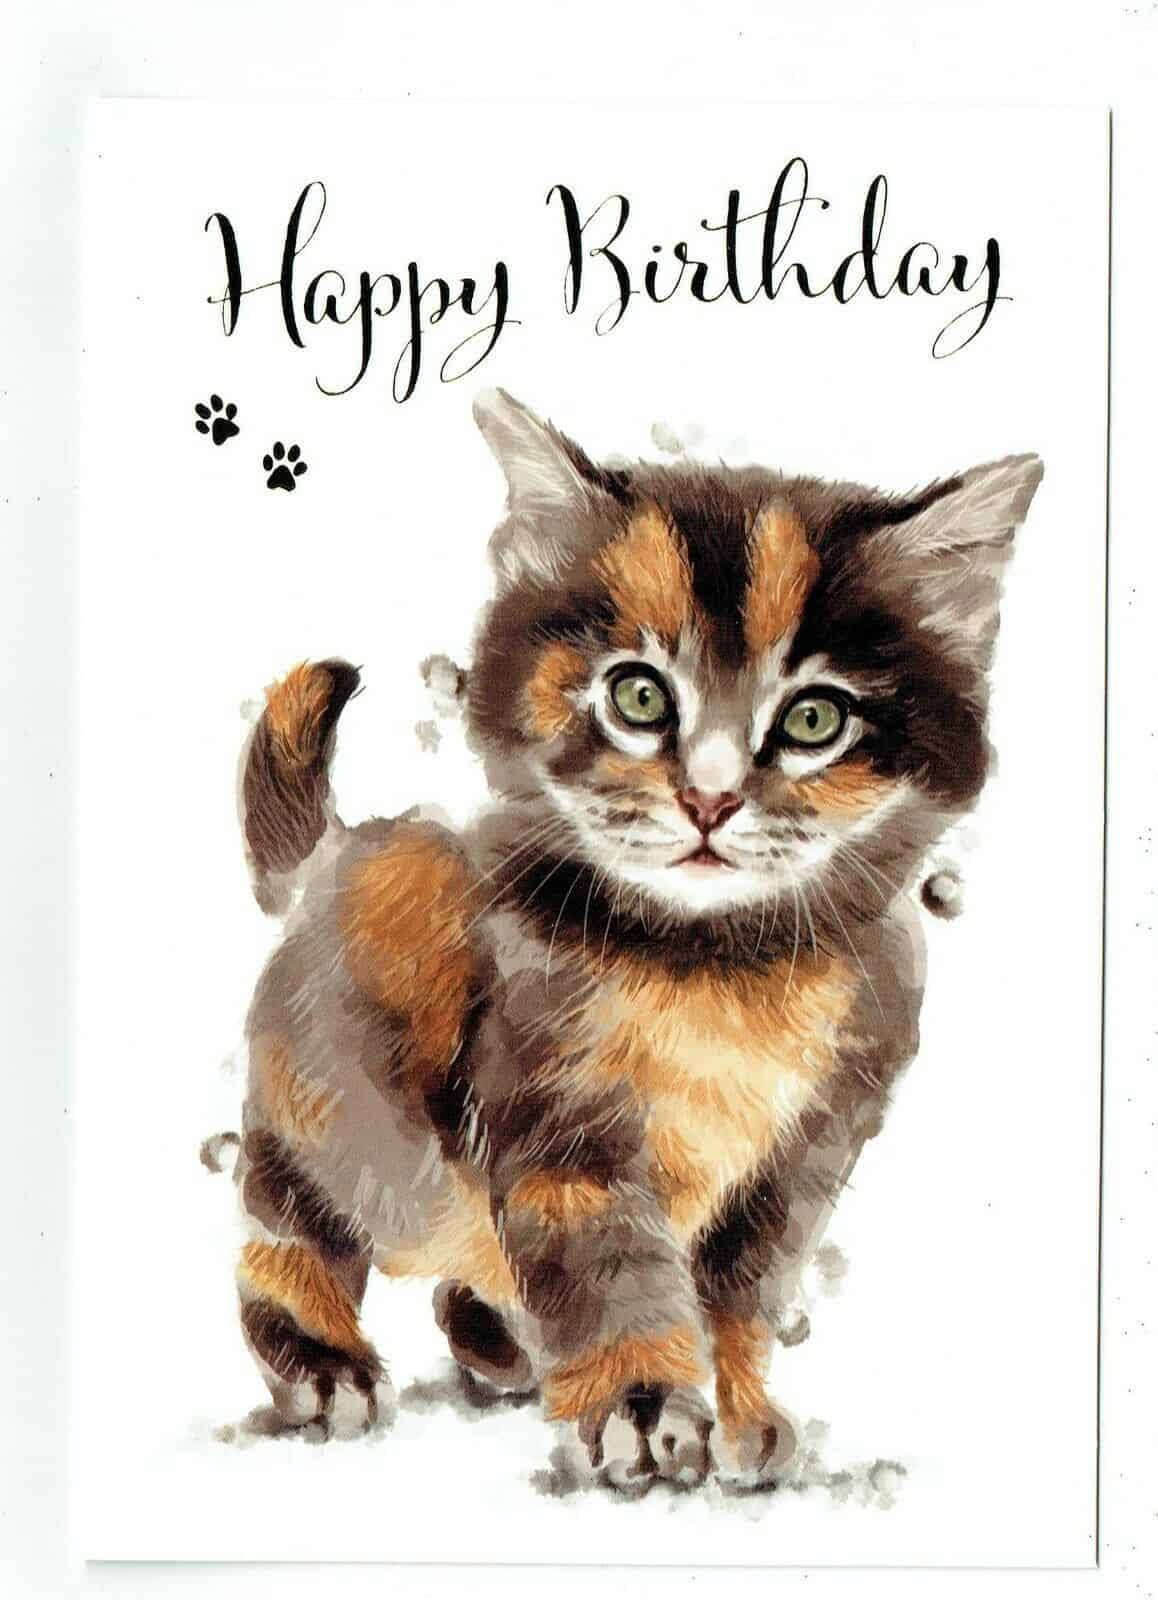 General Birthday Card With Cute Cat Design Happy Birthday ...